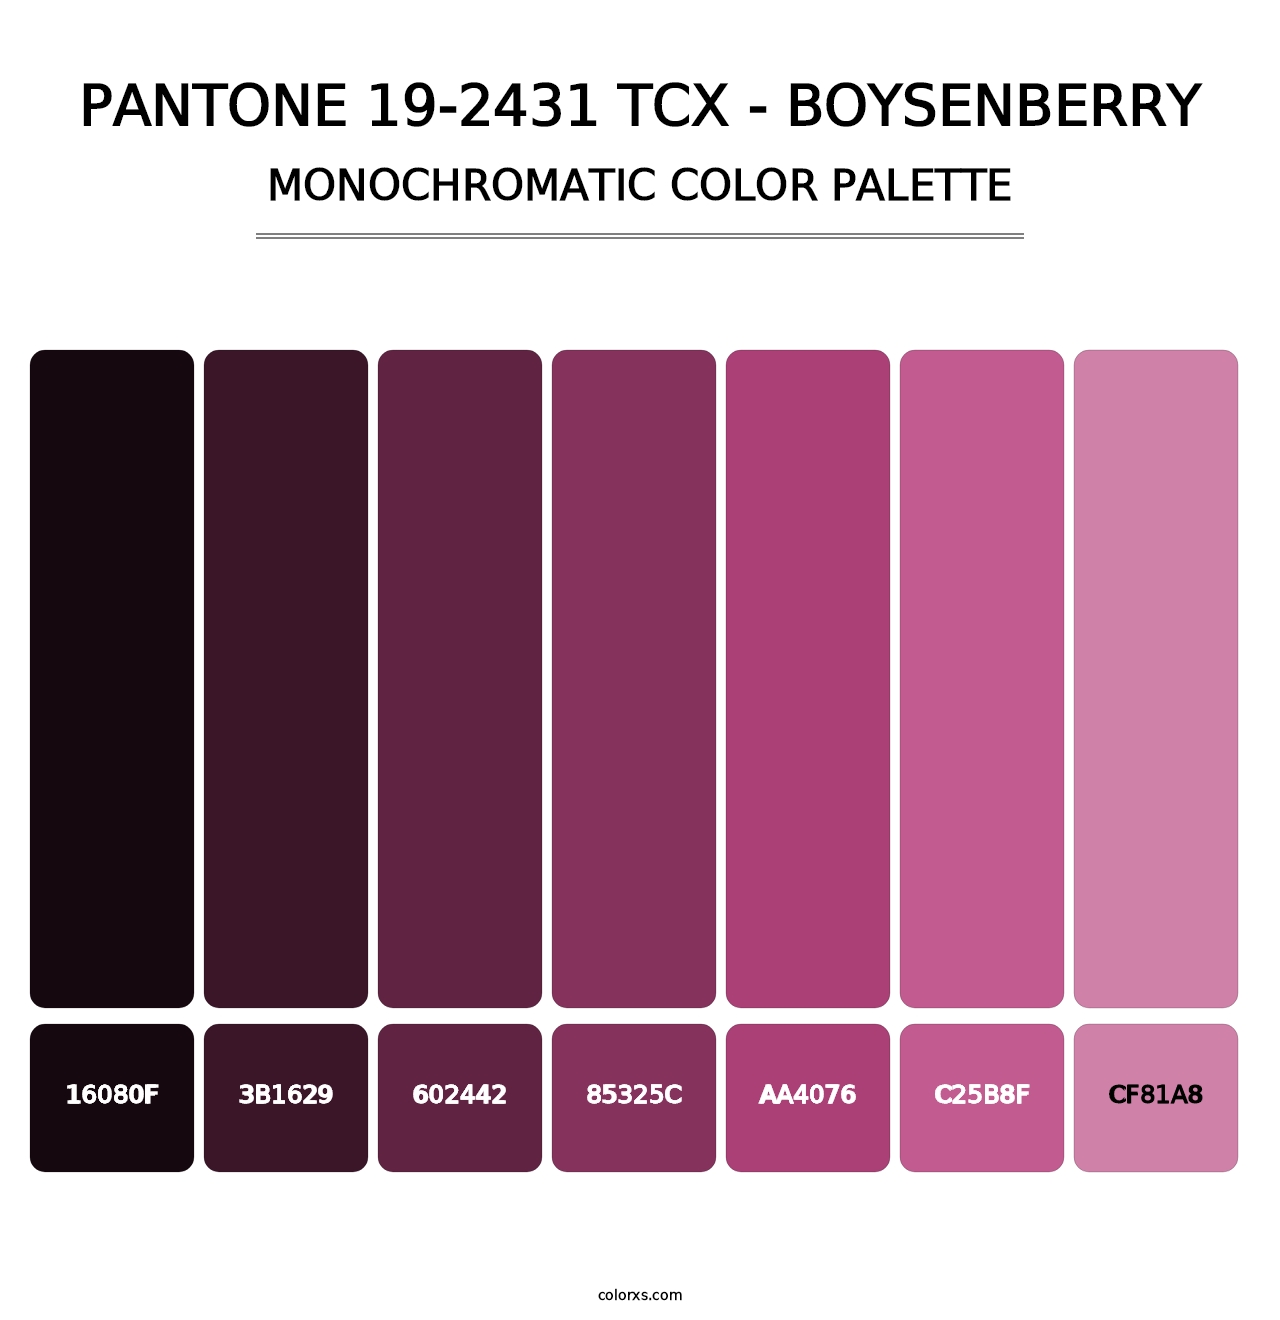 PANTONE 19-2431 TCX - Boysenberry - Monochromatic Color Palette